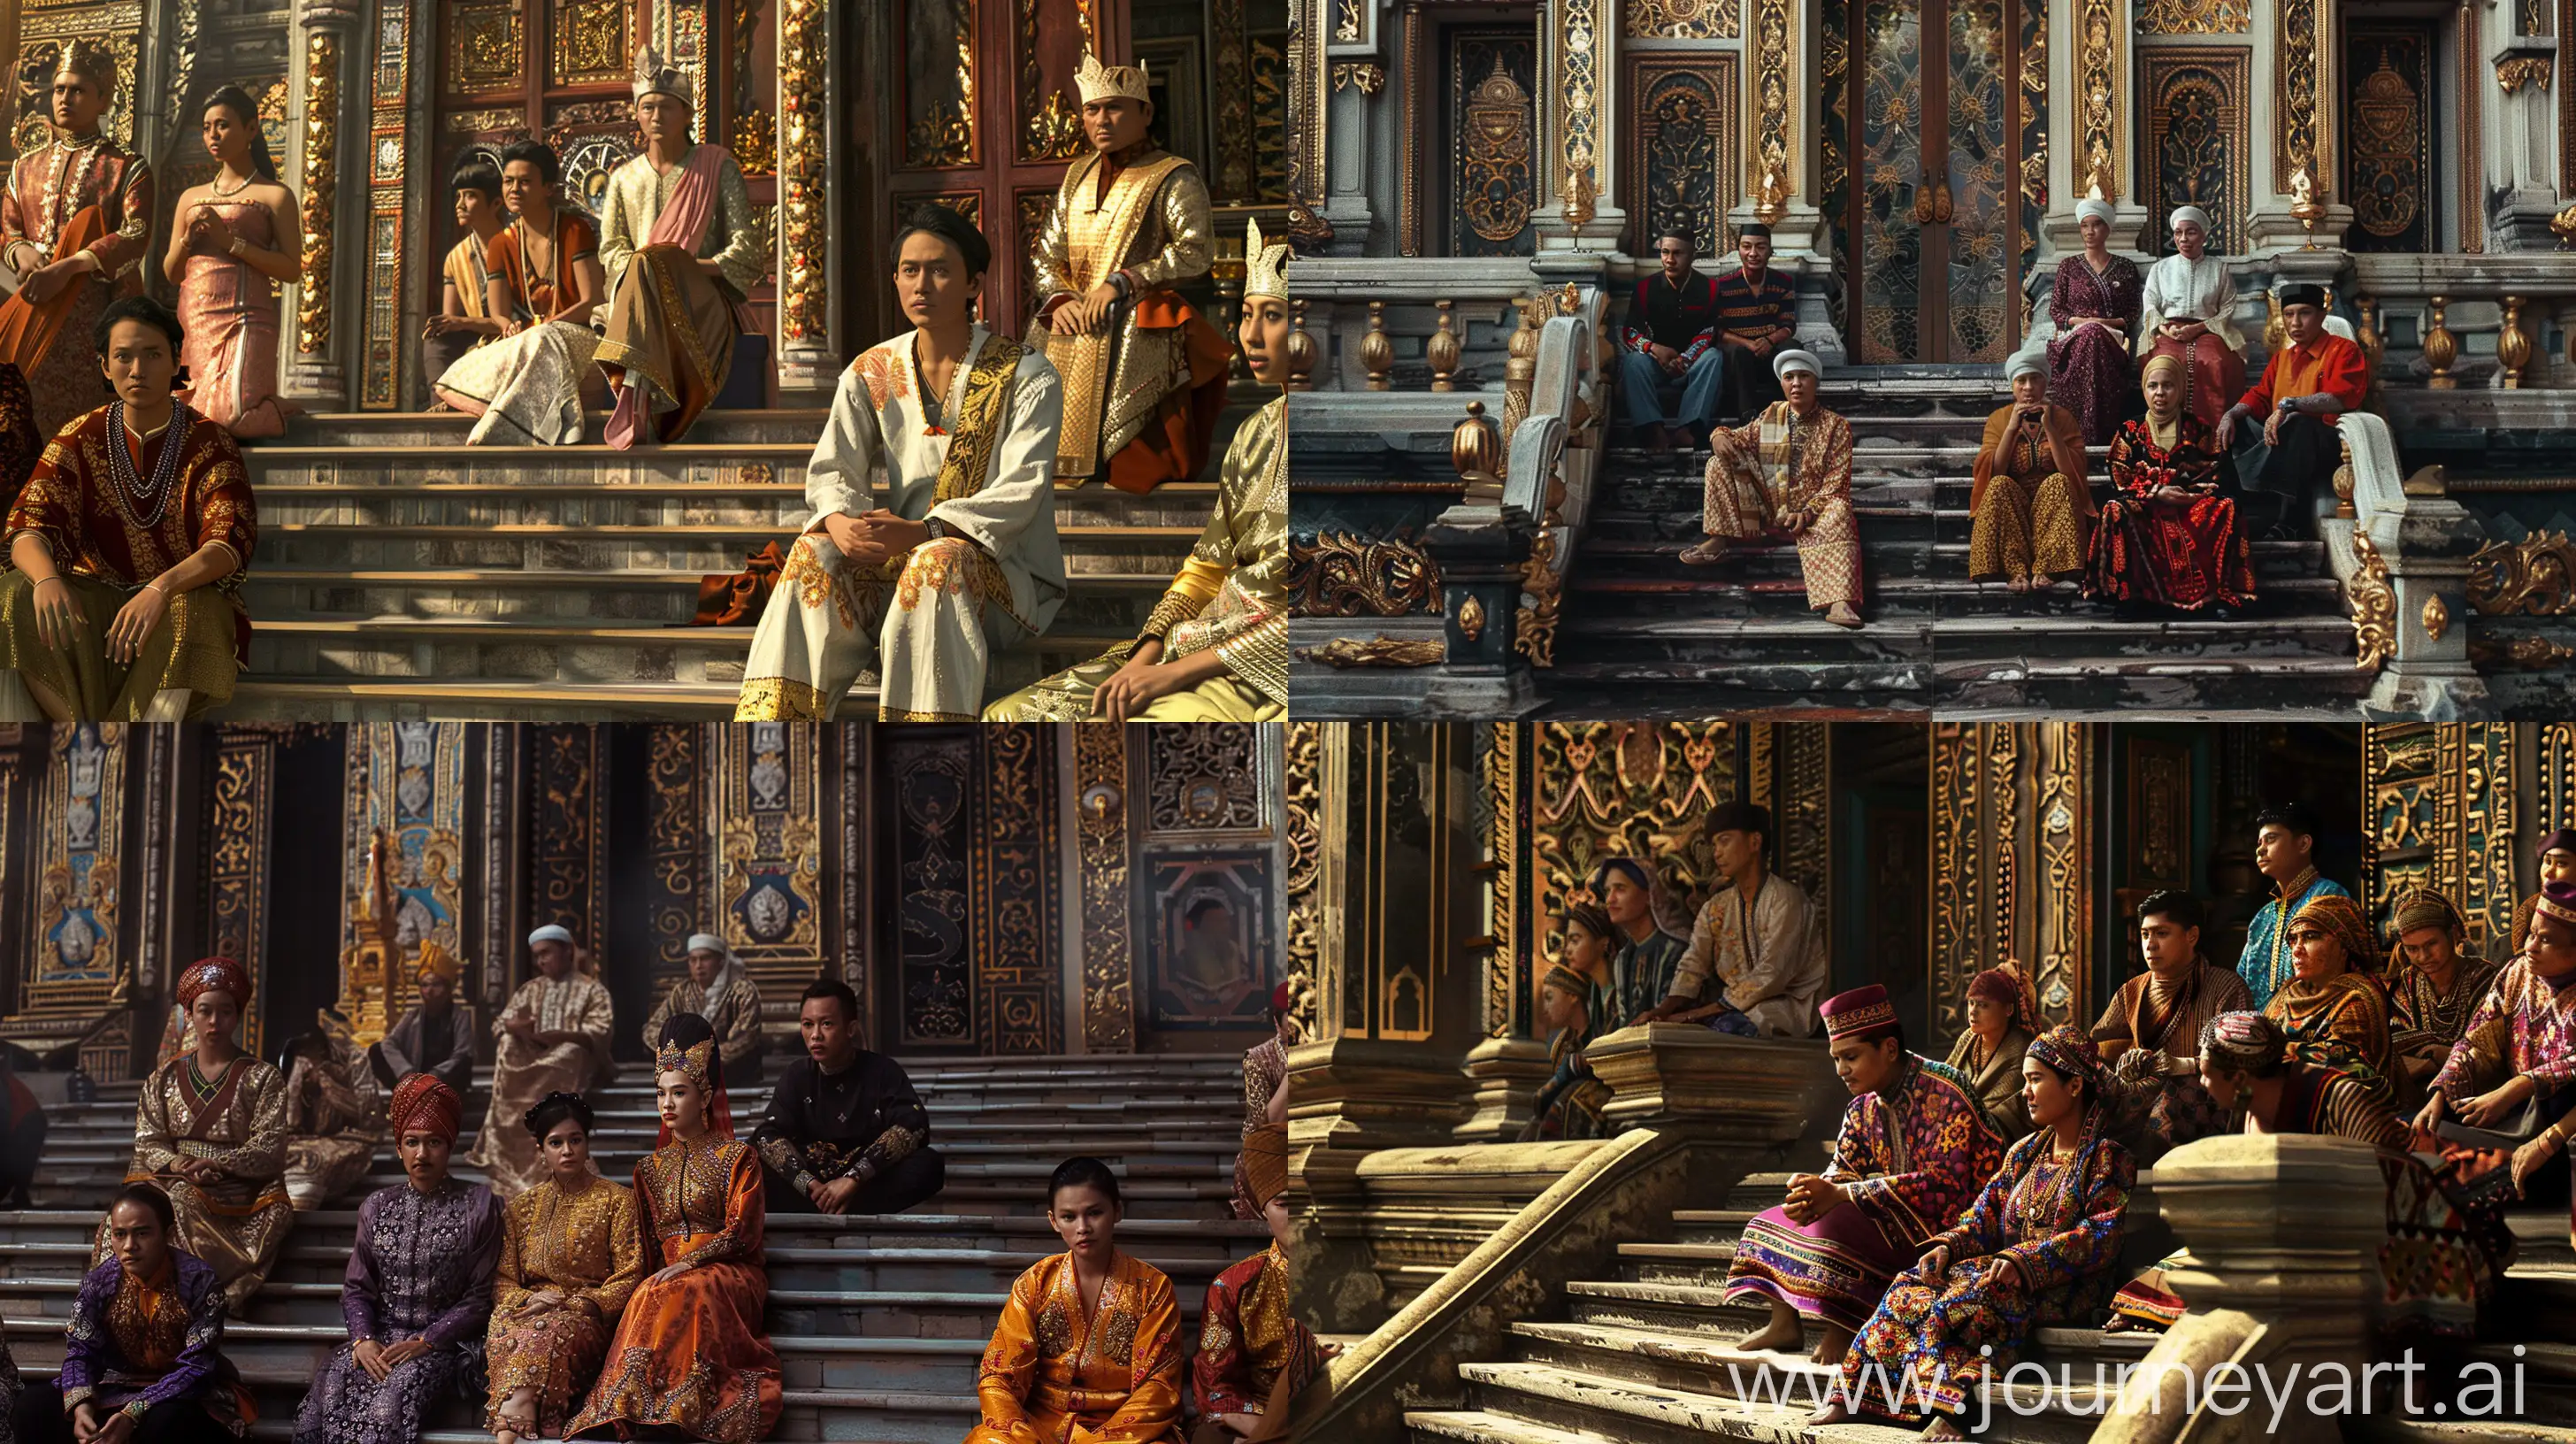 Traditional-Mataram-Kingdom-Clothing-Gathering-on-Ornate-Staircase